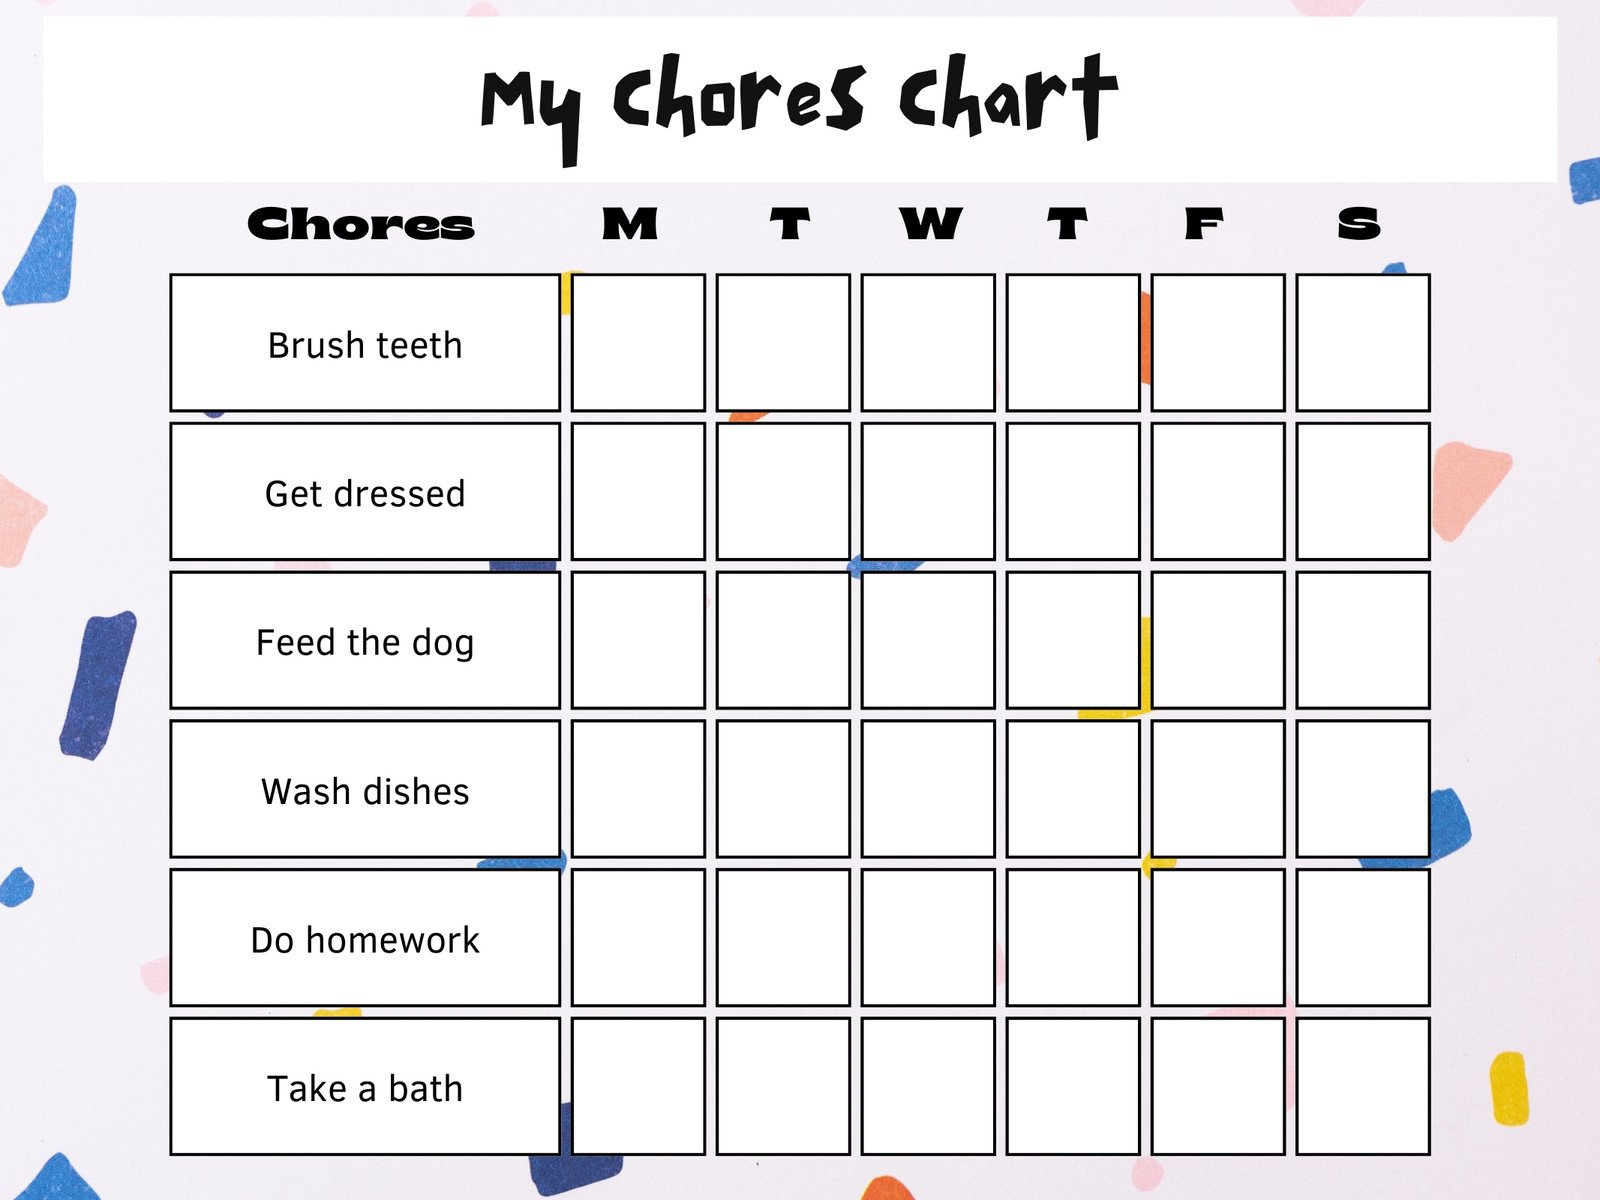 behavior chart template middle school